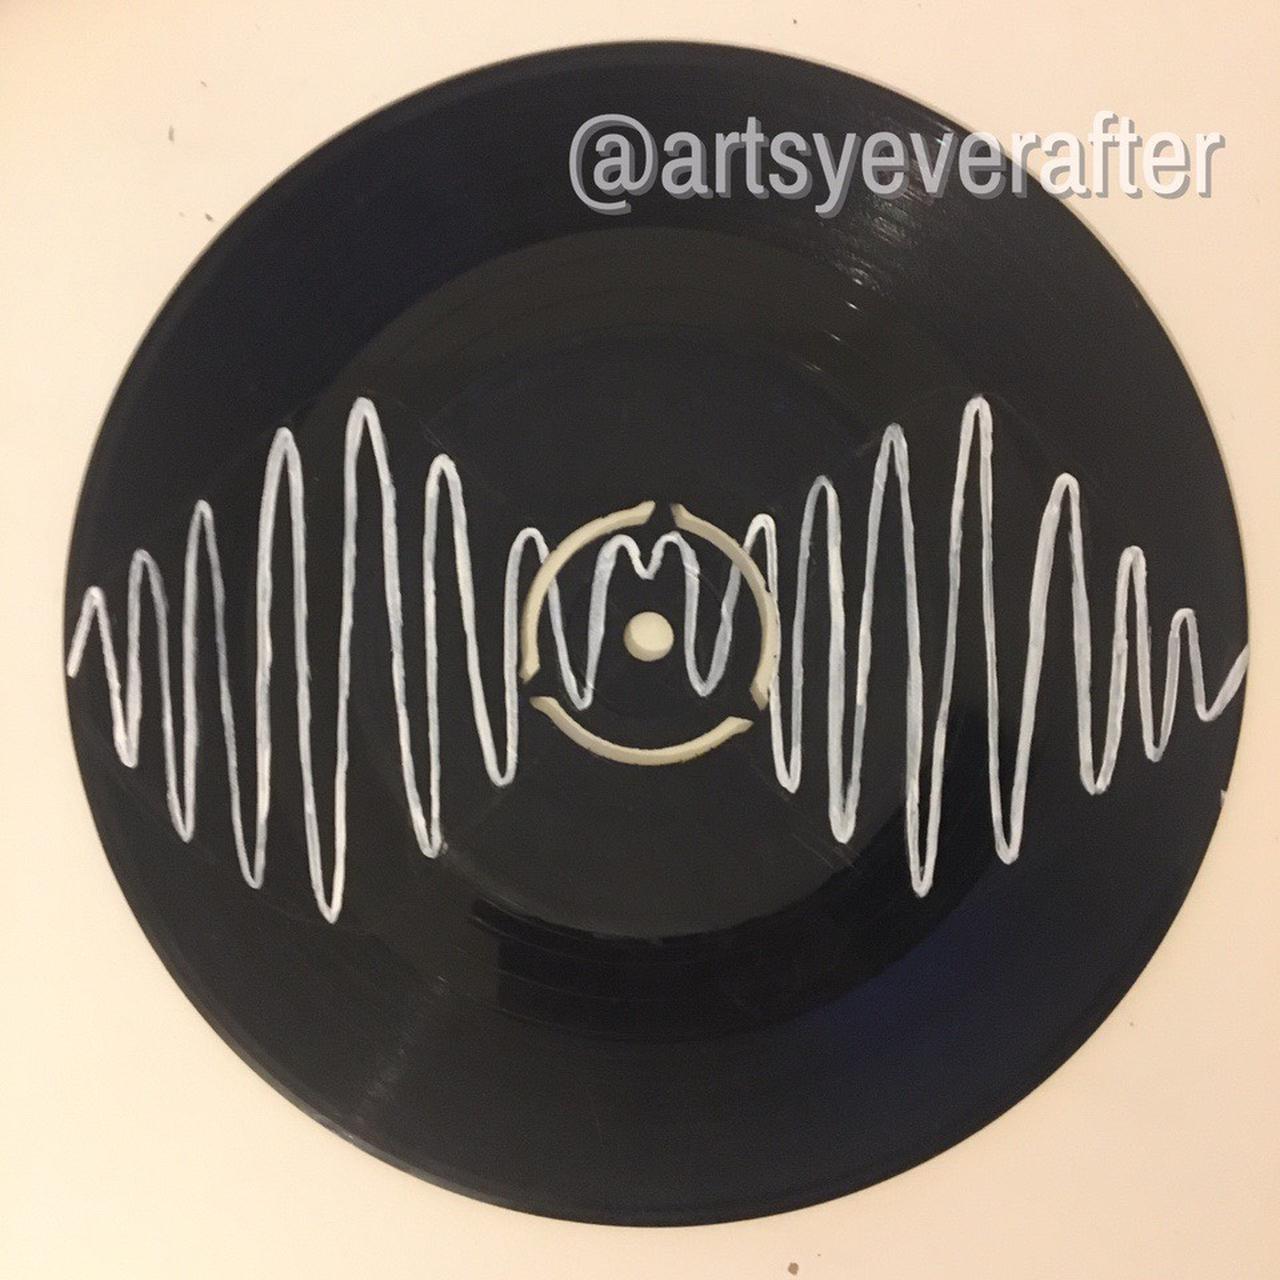 Arctic Monkeys Painted Vinyl Record